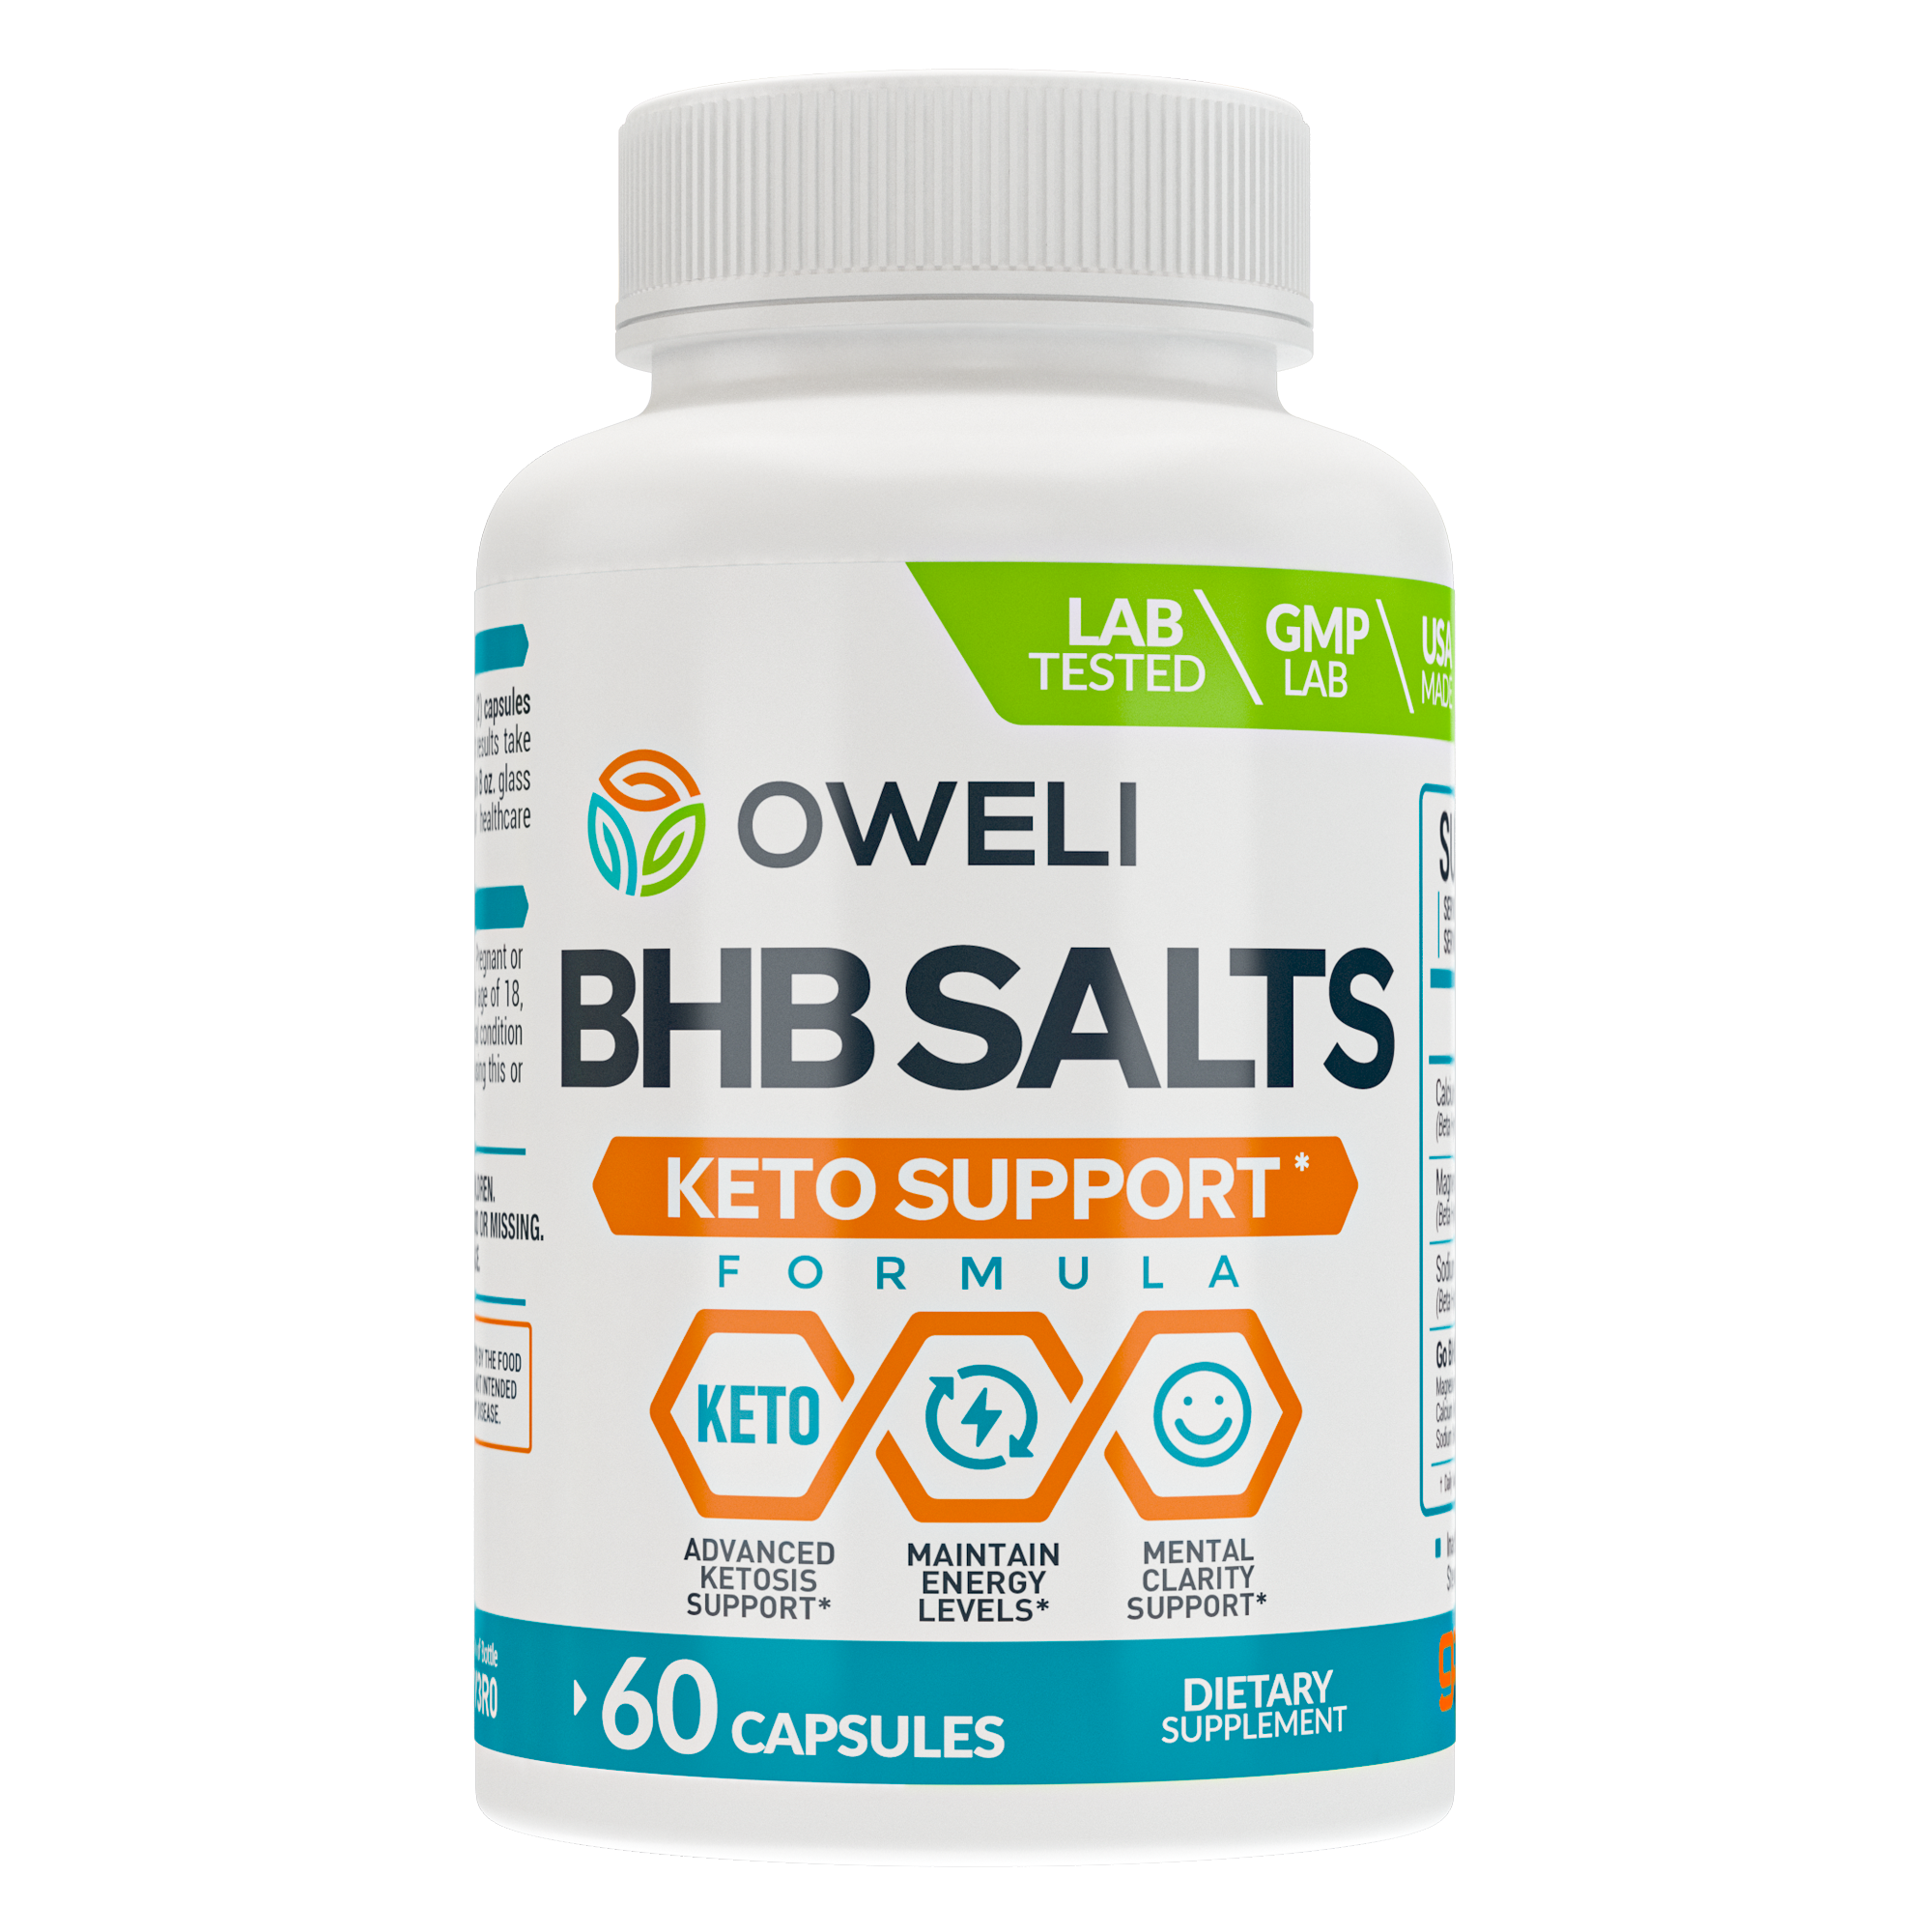 Oweli BHB Salts